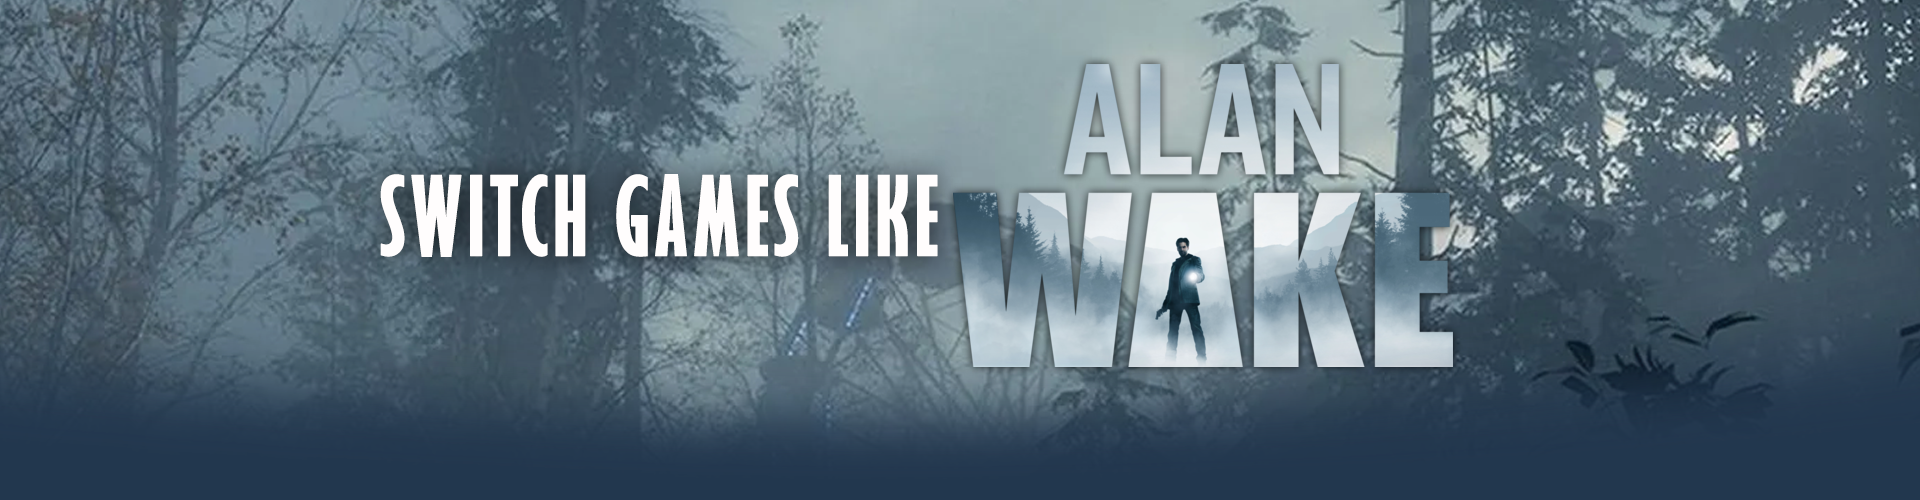 Switch Games Like Alan Wake